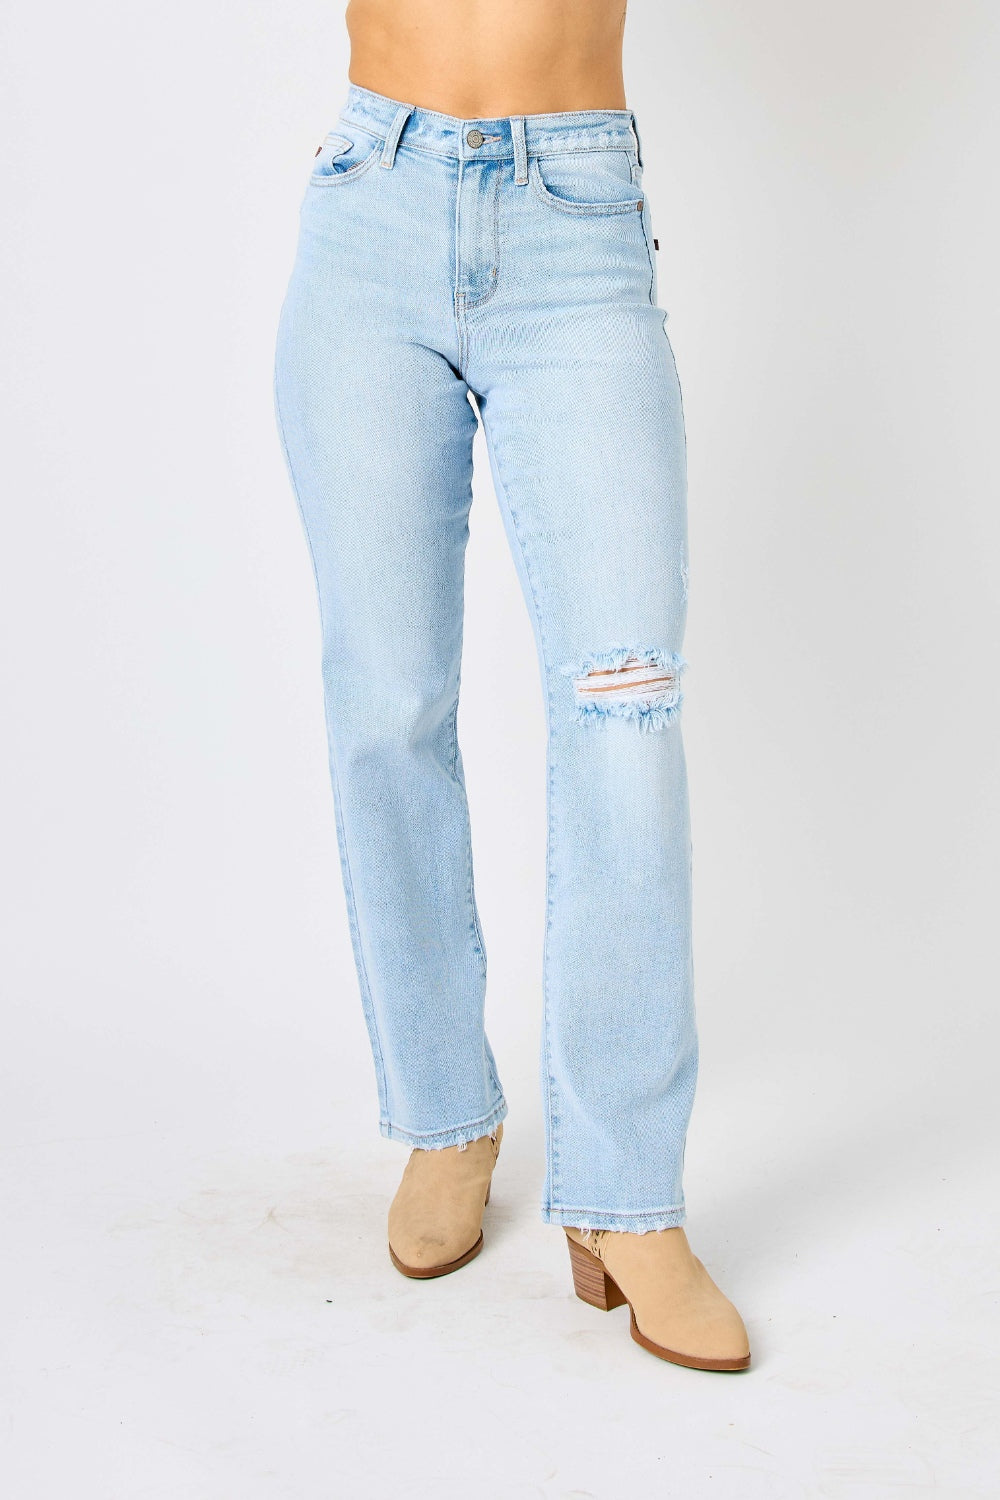 Judy Blue Full Size High Waist Distressed Straight Jeans - Babbazon new